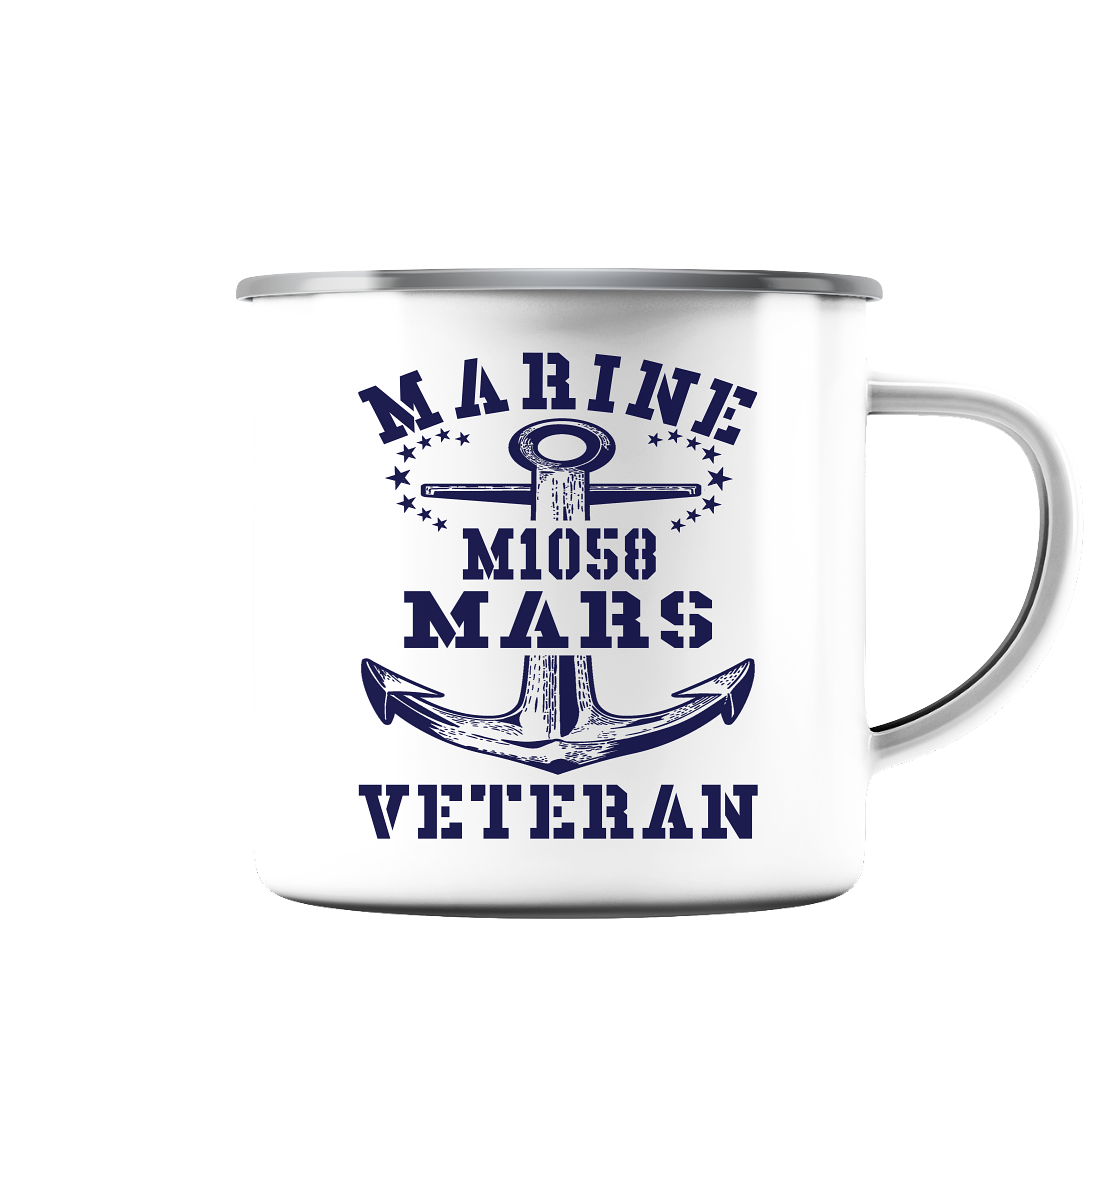 SM-Boot M1058 MARS Marine Veteran - Emaille Tasse (Silber)